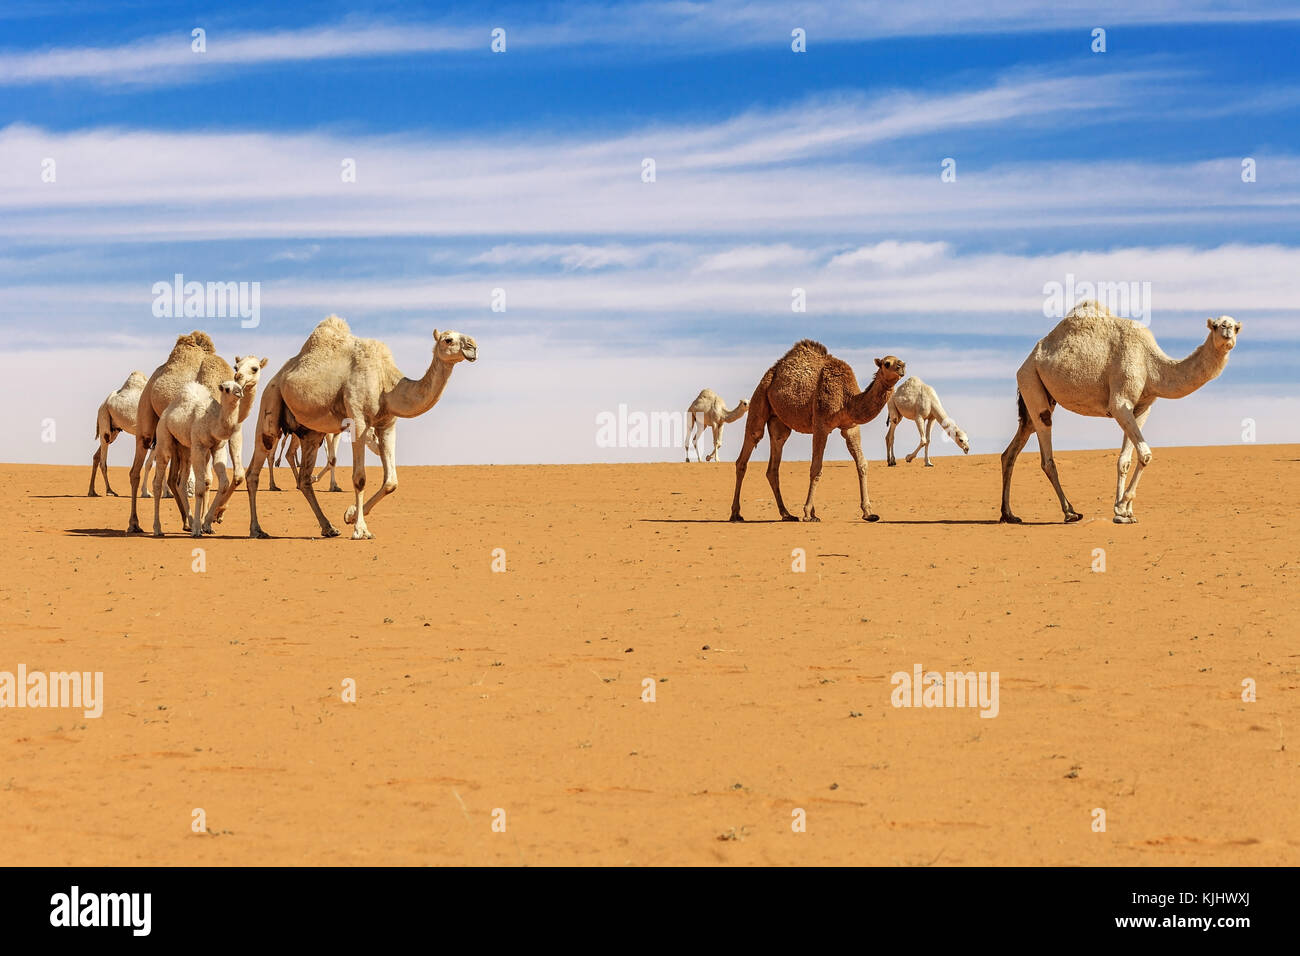 Herd of camels in the desert, Saudi Arabia Stock Photo